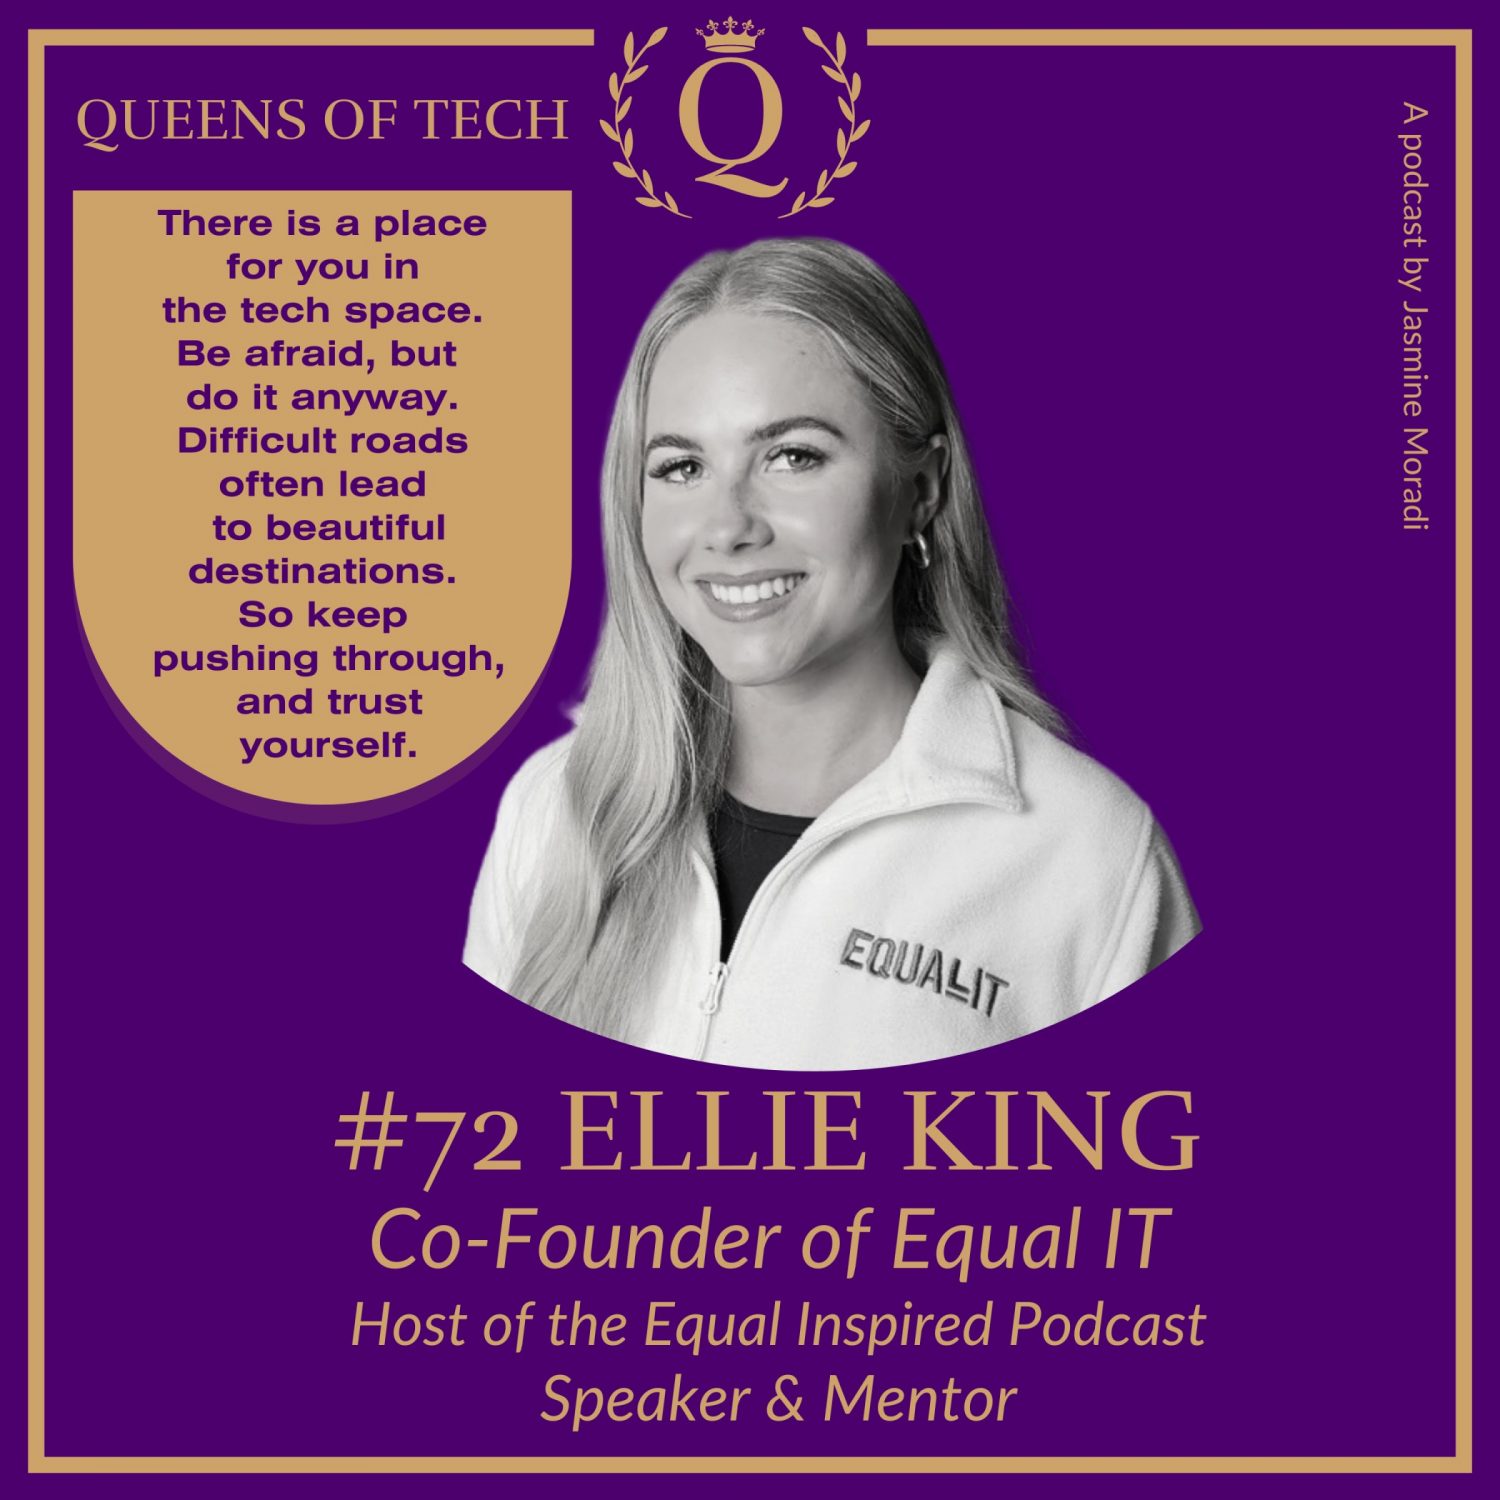 Ellie King – Co-Founder of Equal IT